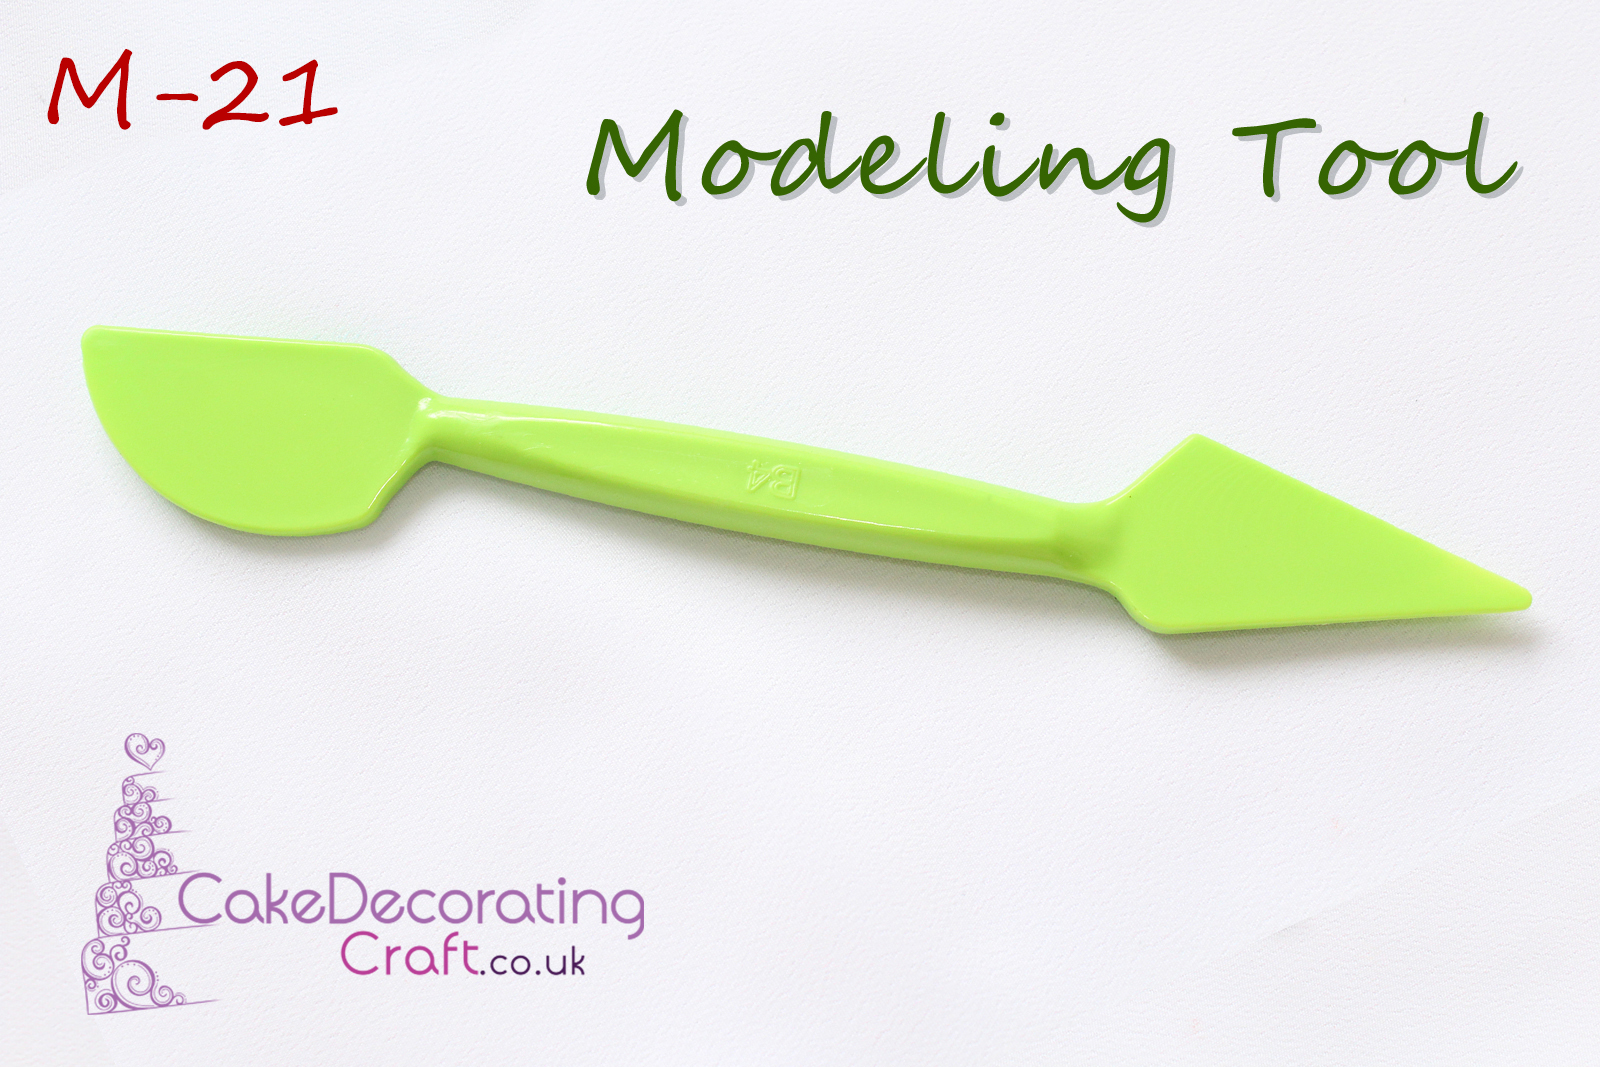 Cake Decorating Craft Modelling Tools | Double Ended | Gum Paste Flower Paste Modelling Sugar Paste Craft | M-21